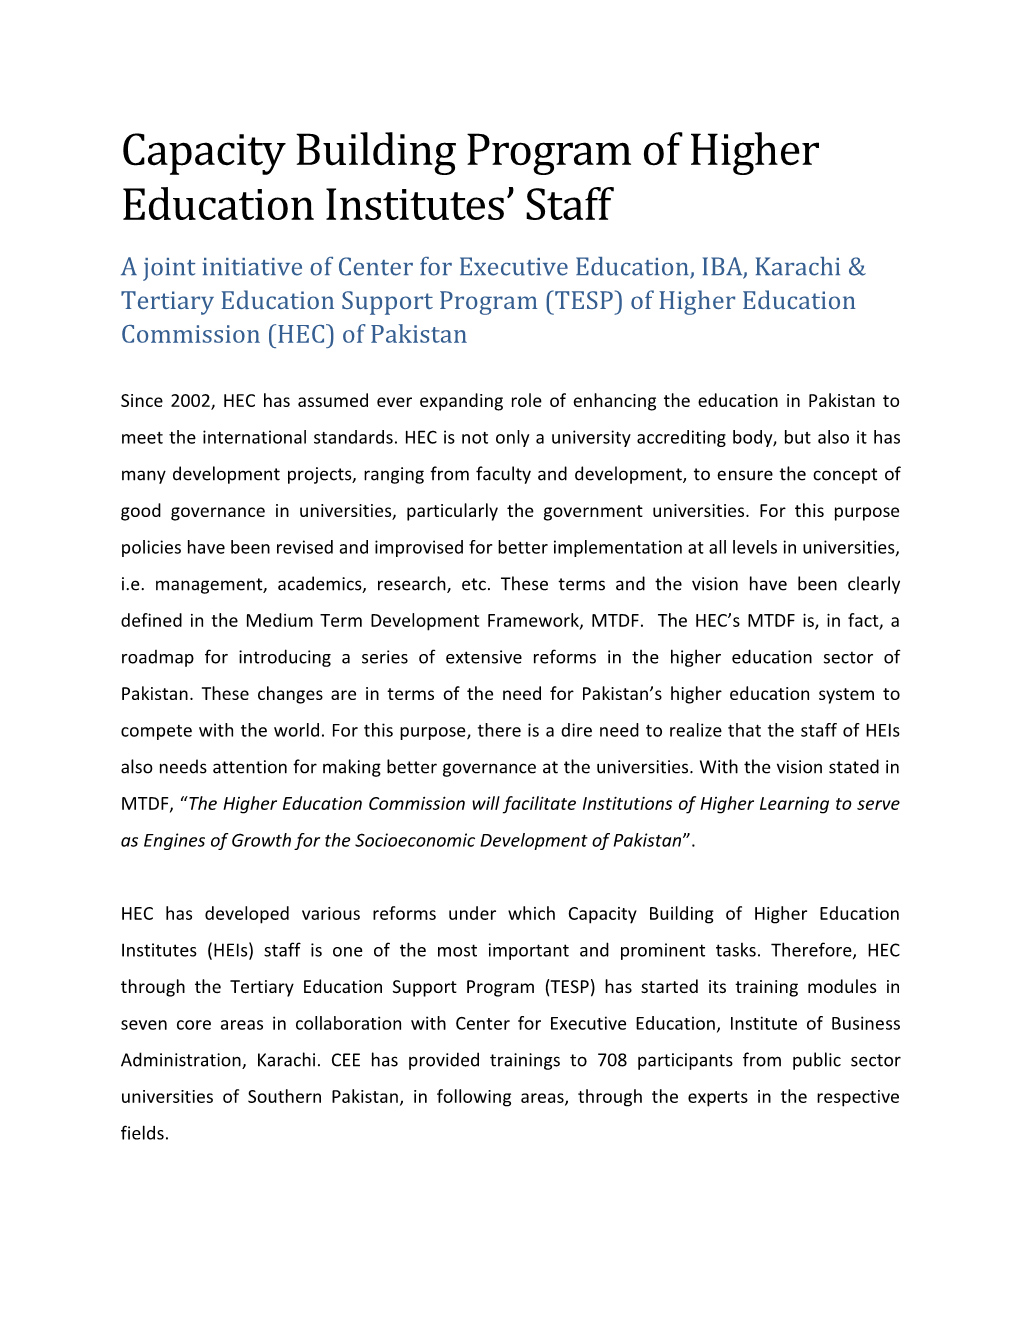 Capacity Building Program of Higher Education Institutes' Staff